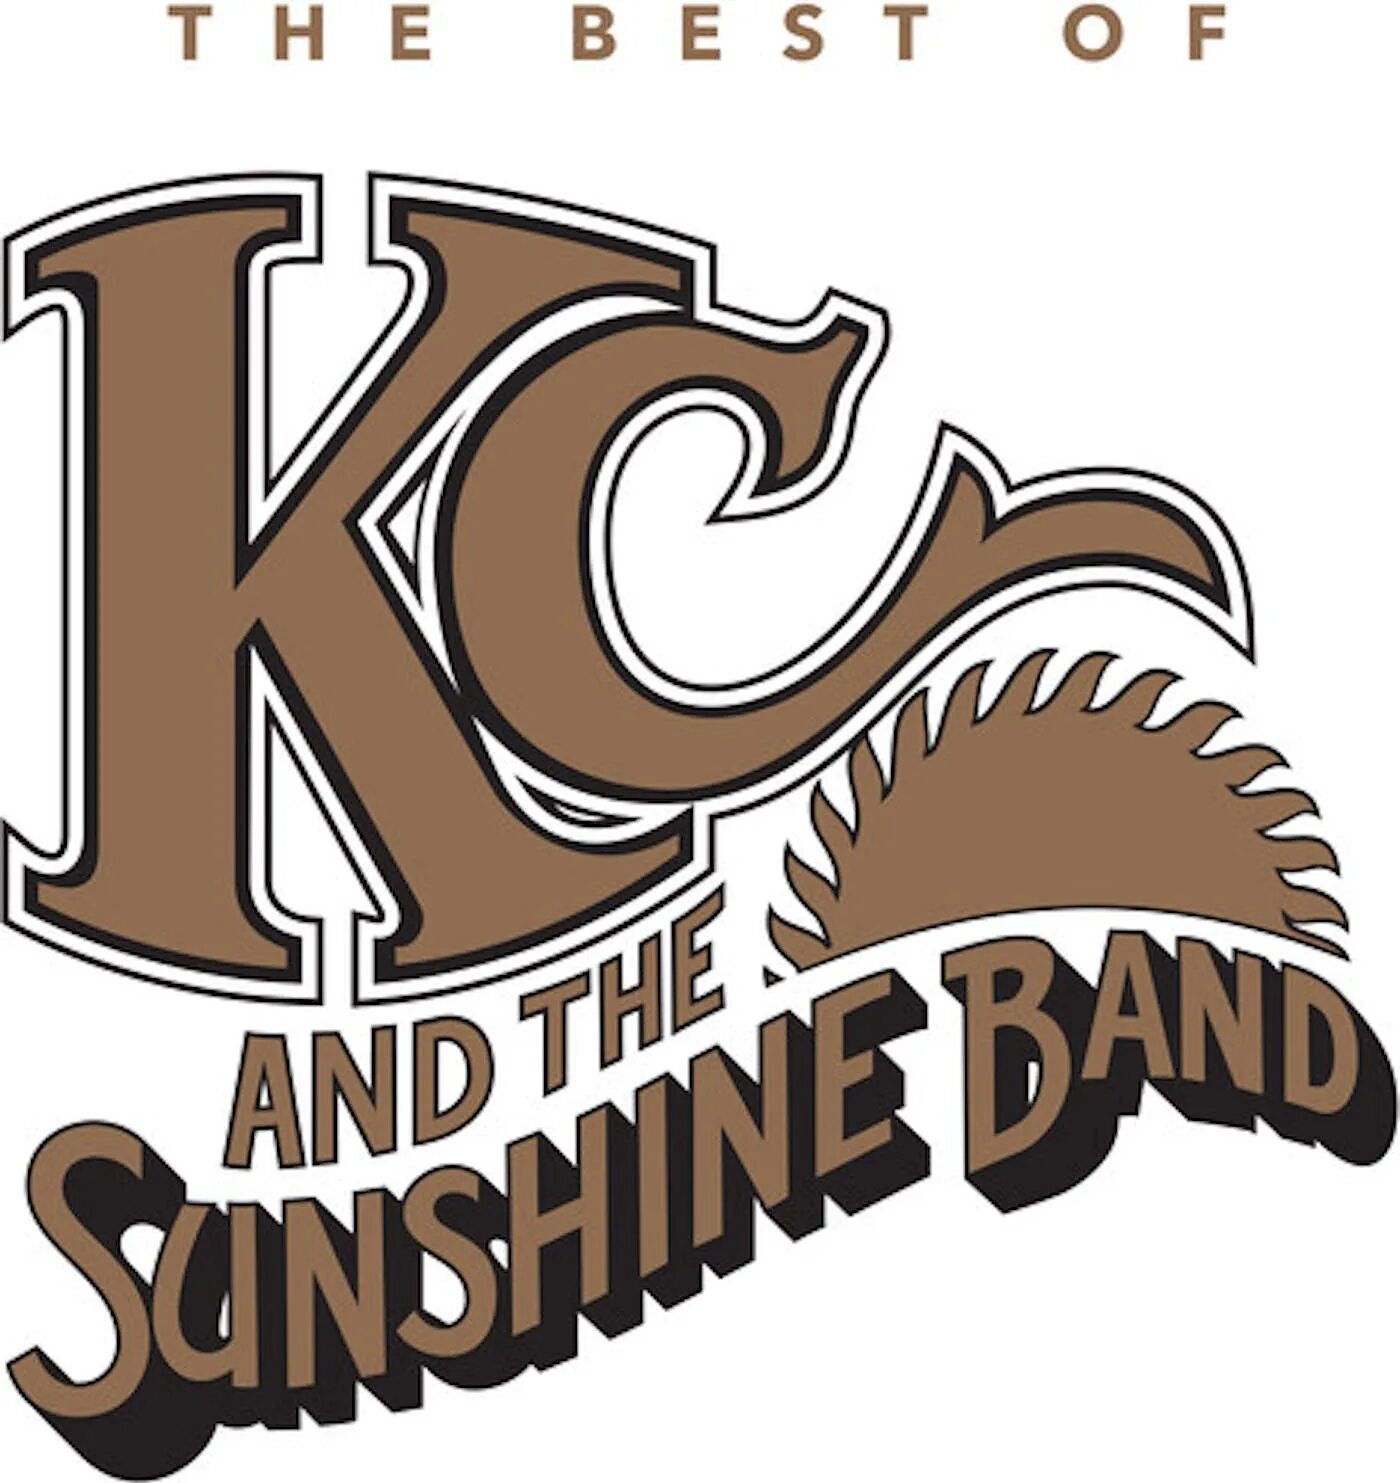 Группа Kc and the Sunshine Band. Kc and the Sunshine Band Kc and the Sunshine Band. Kc & the Sunshine Band - the best of. Картинки Kc s the Sunshine Band the best of.